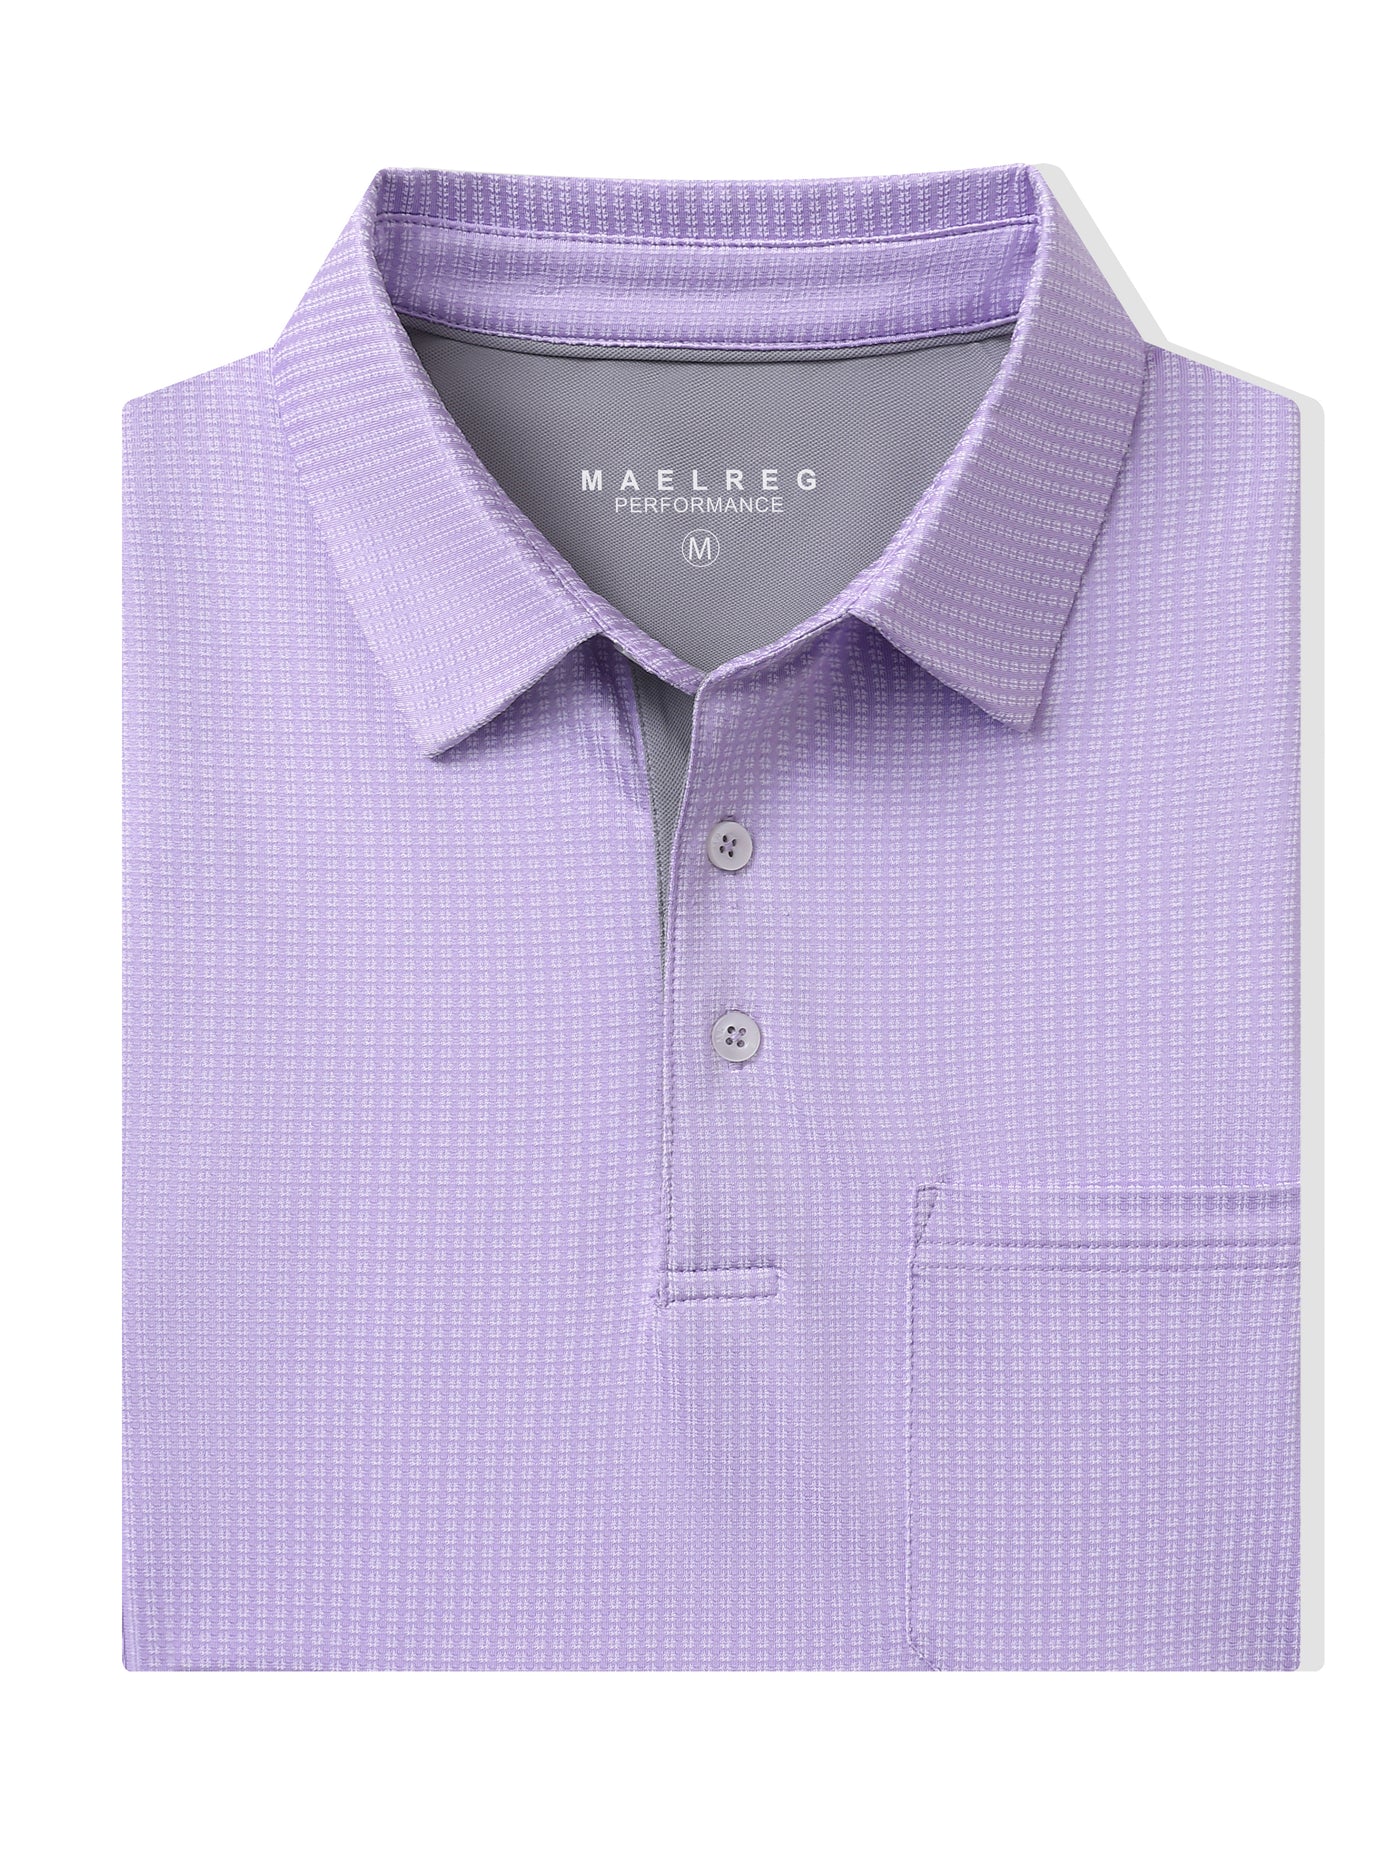 Men's Dry Fit Jacquard Pocket Golf Shirts-Lavender